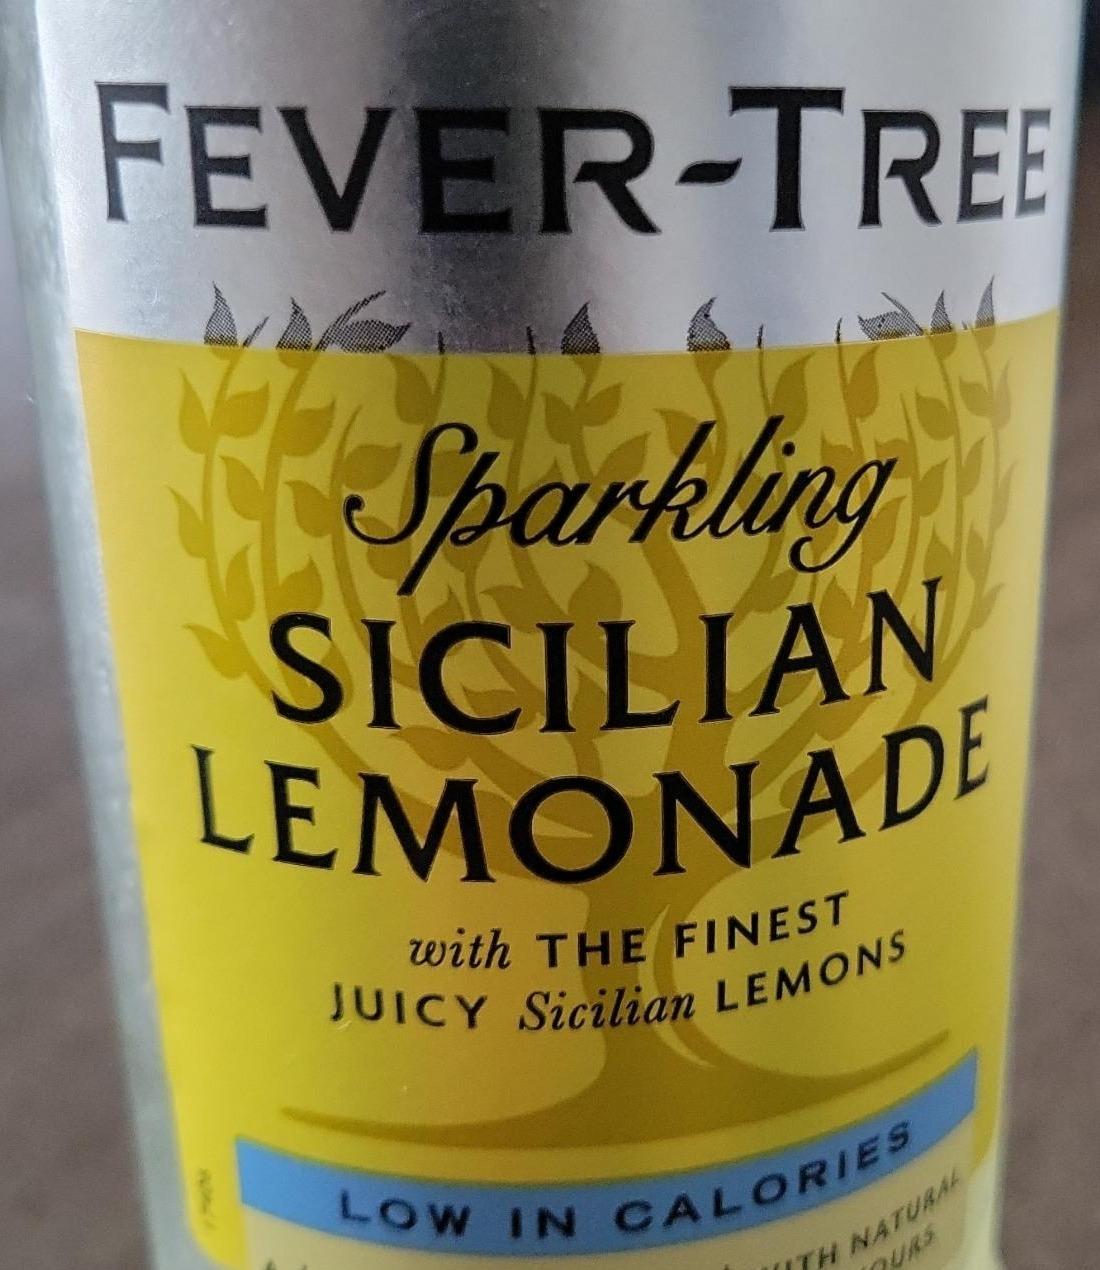 Fotografie - Sparkling Sicilian lemonade with the finest juicy Sicilian lemons Fever-Tree